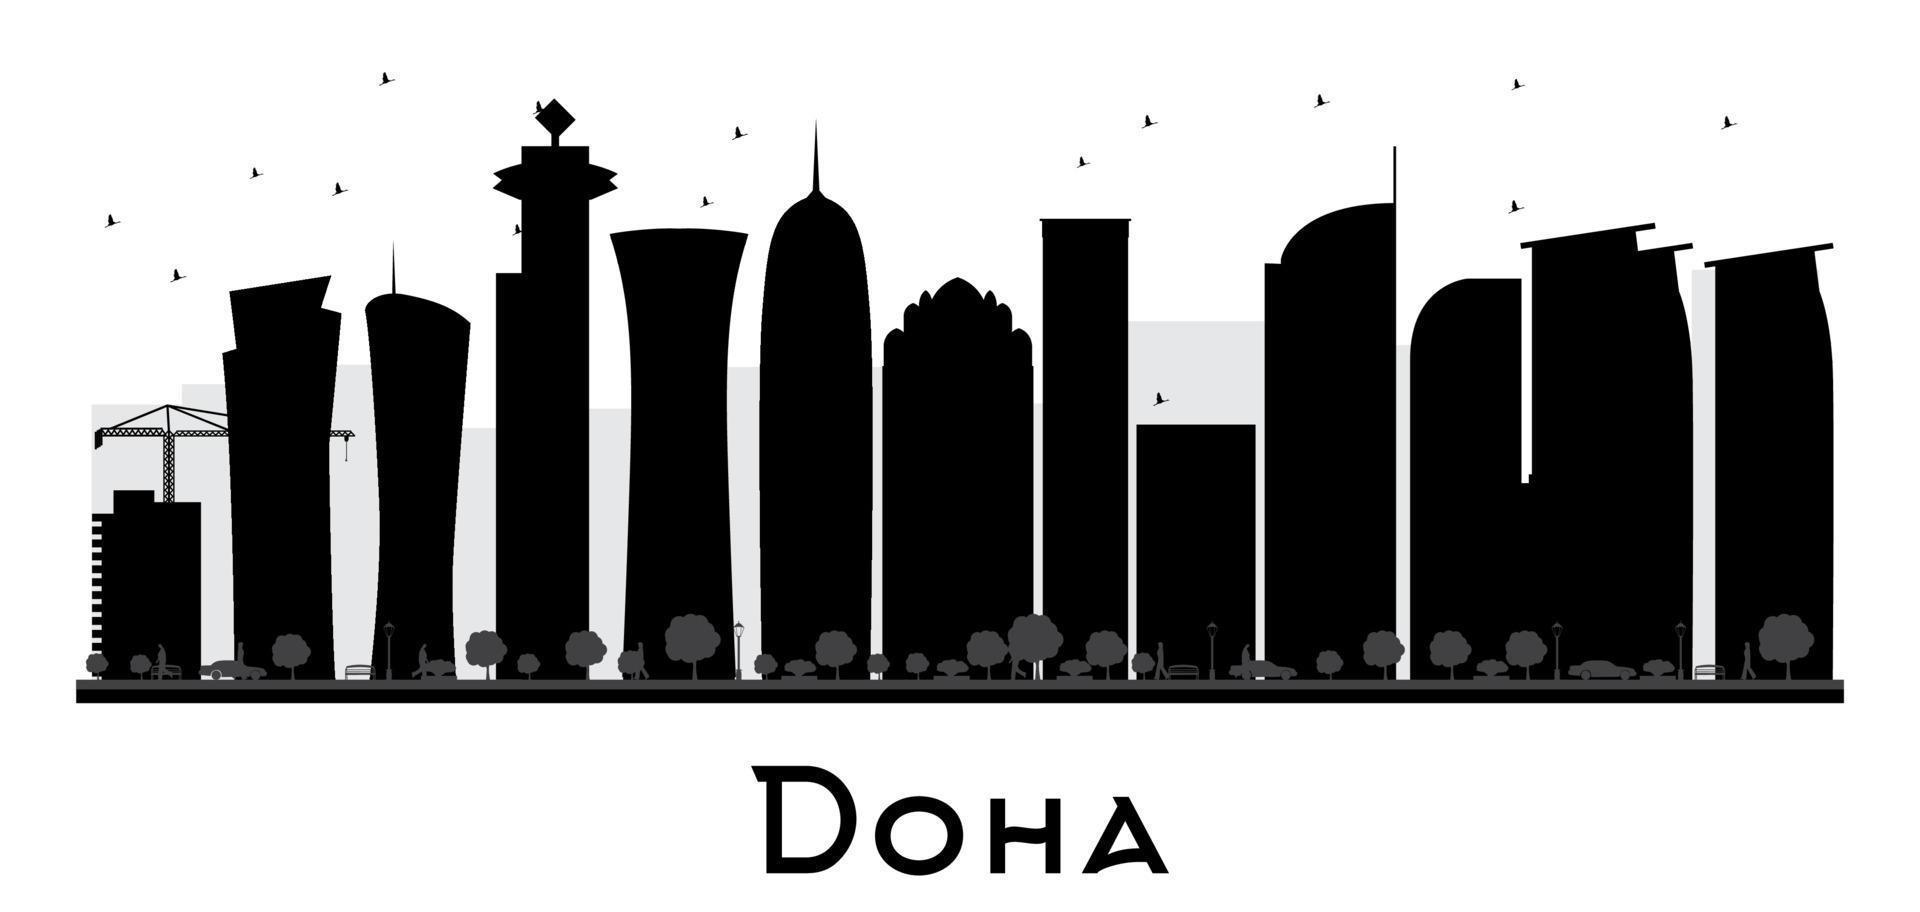 Doha stad skyline zwart-wit silhouet vector